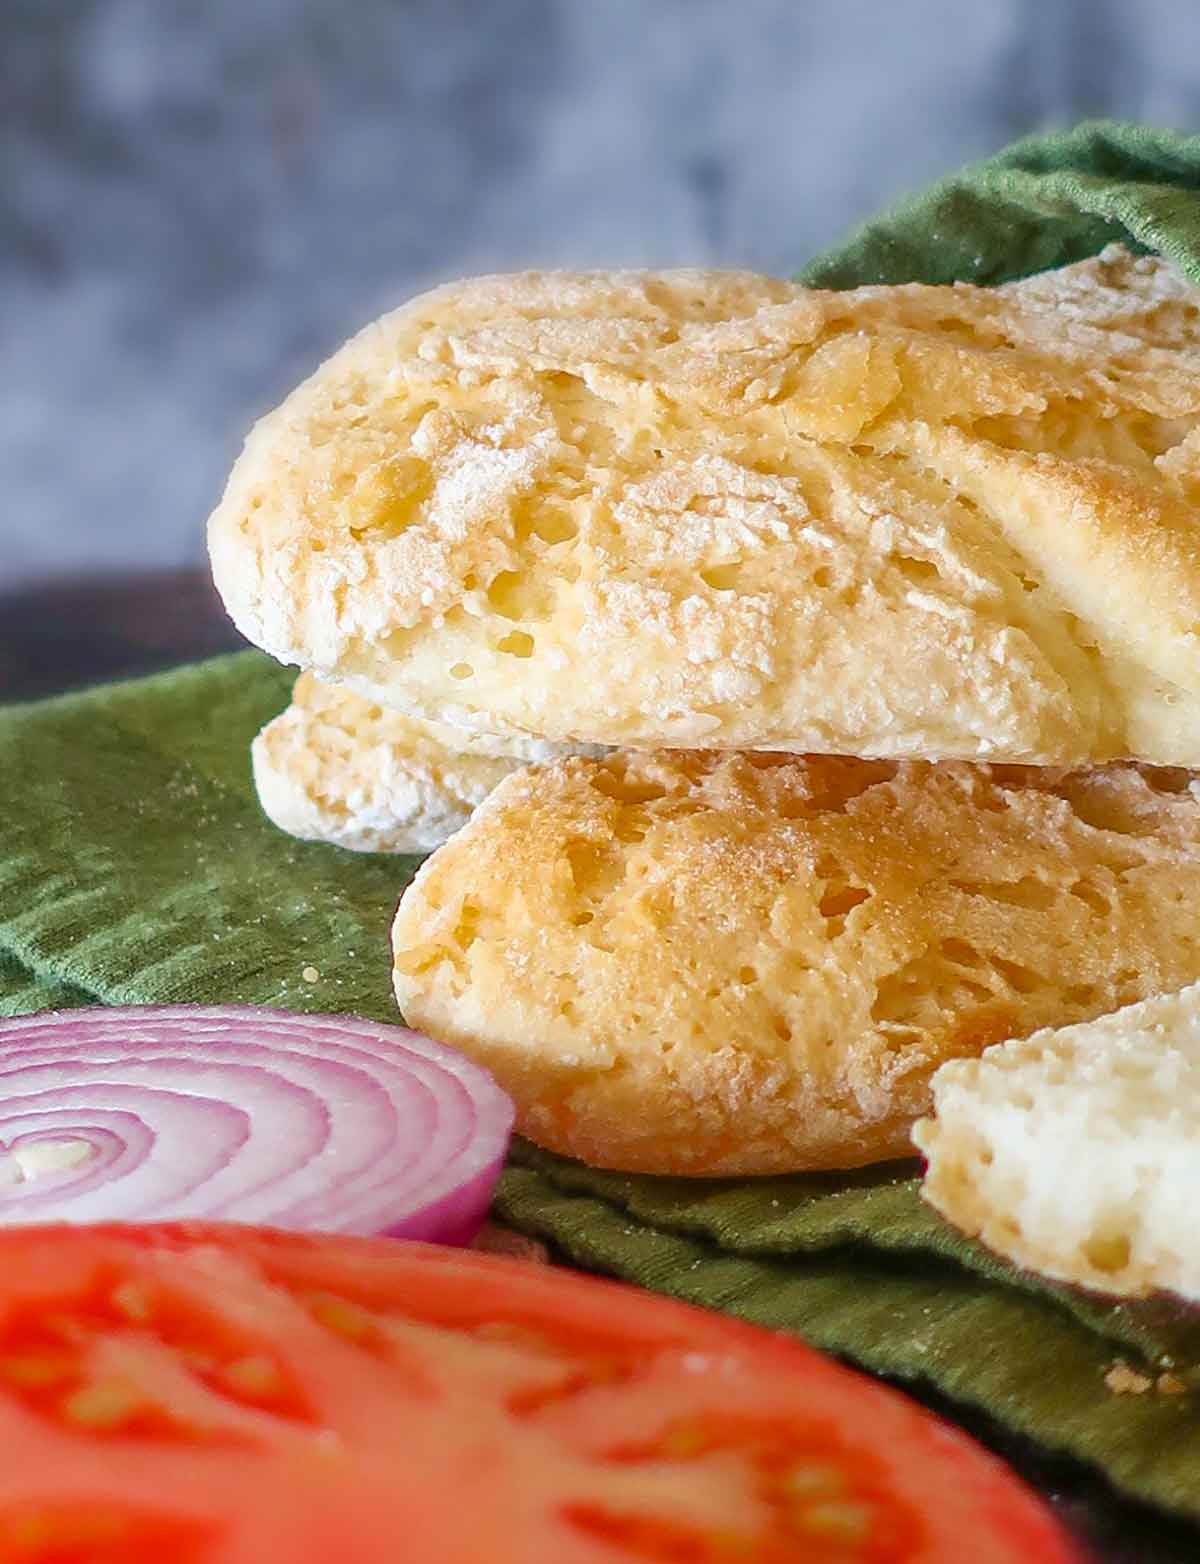 showing whole baked sub rolls